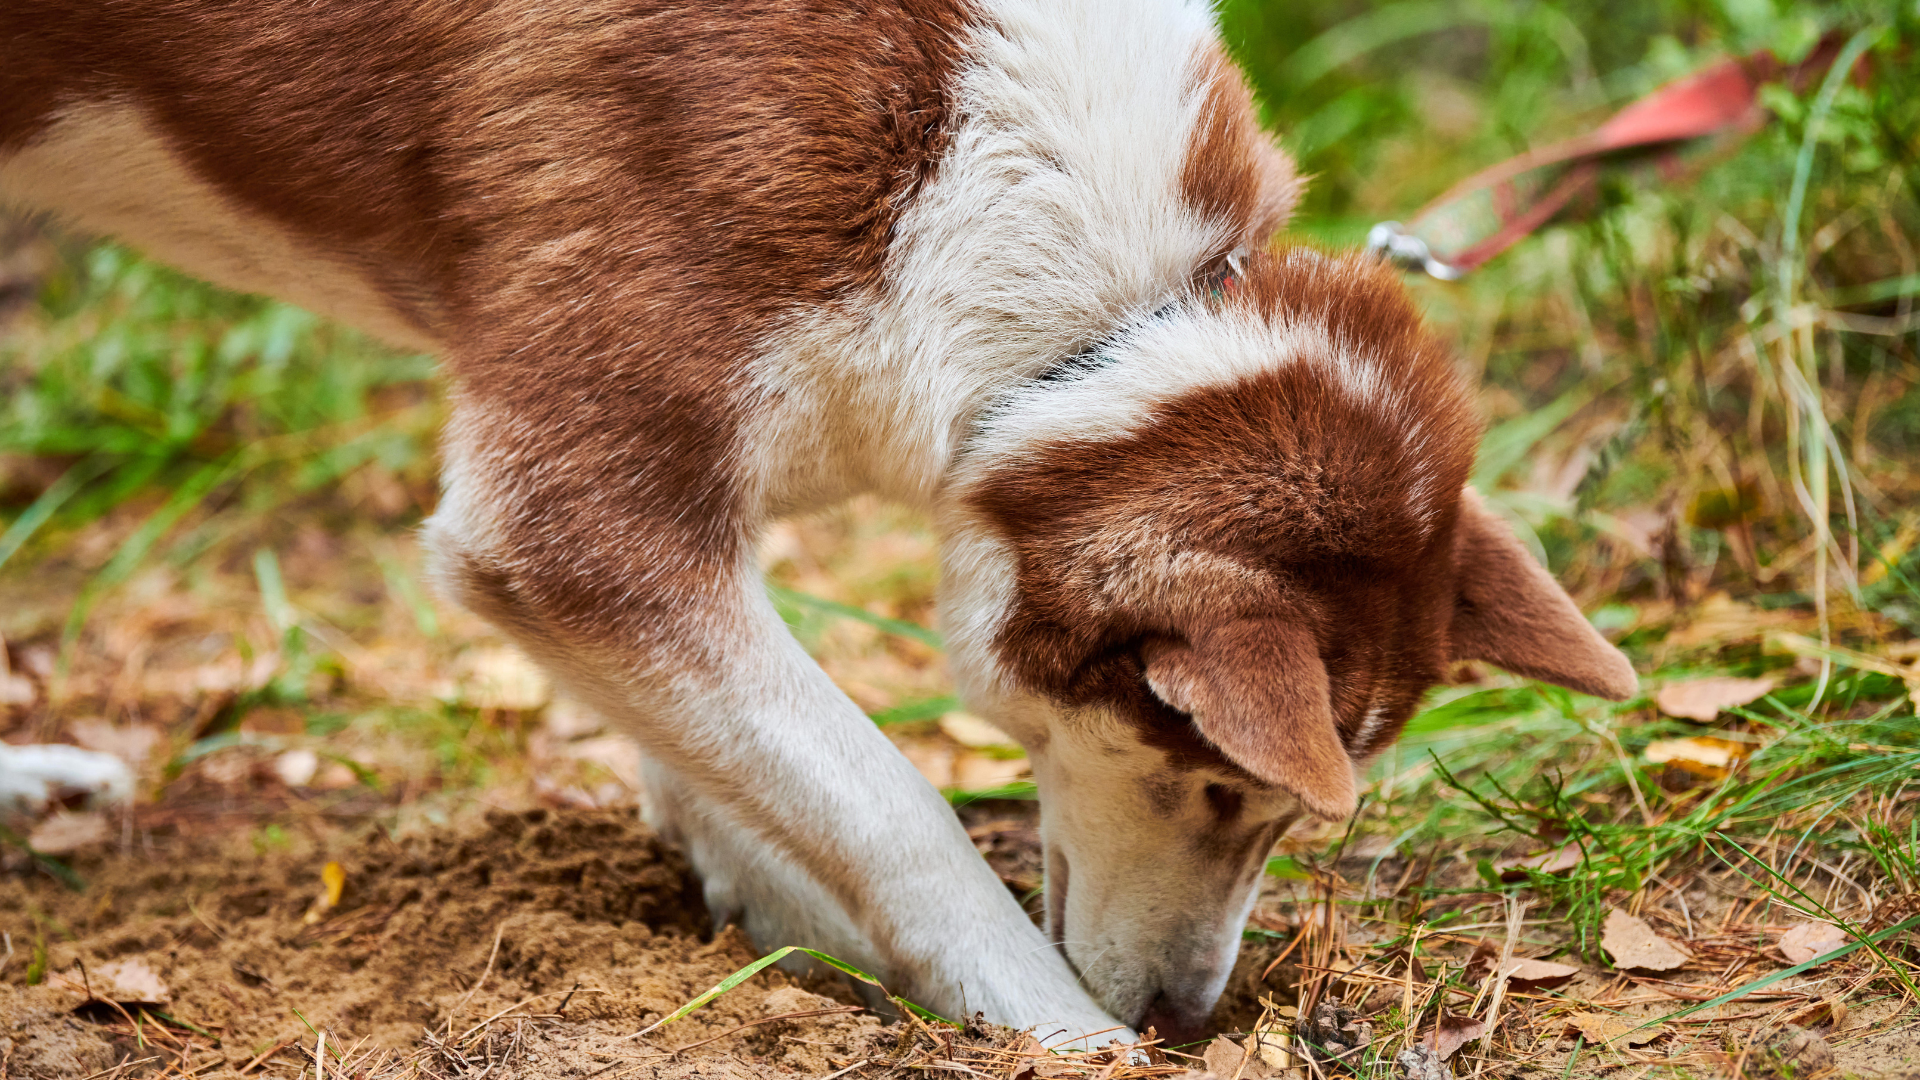 Why Do Dogs Bury Bones